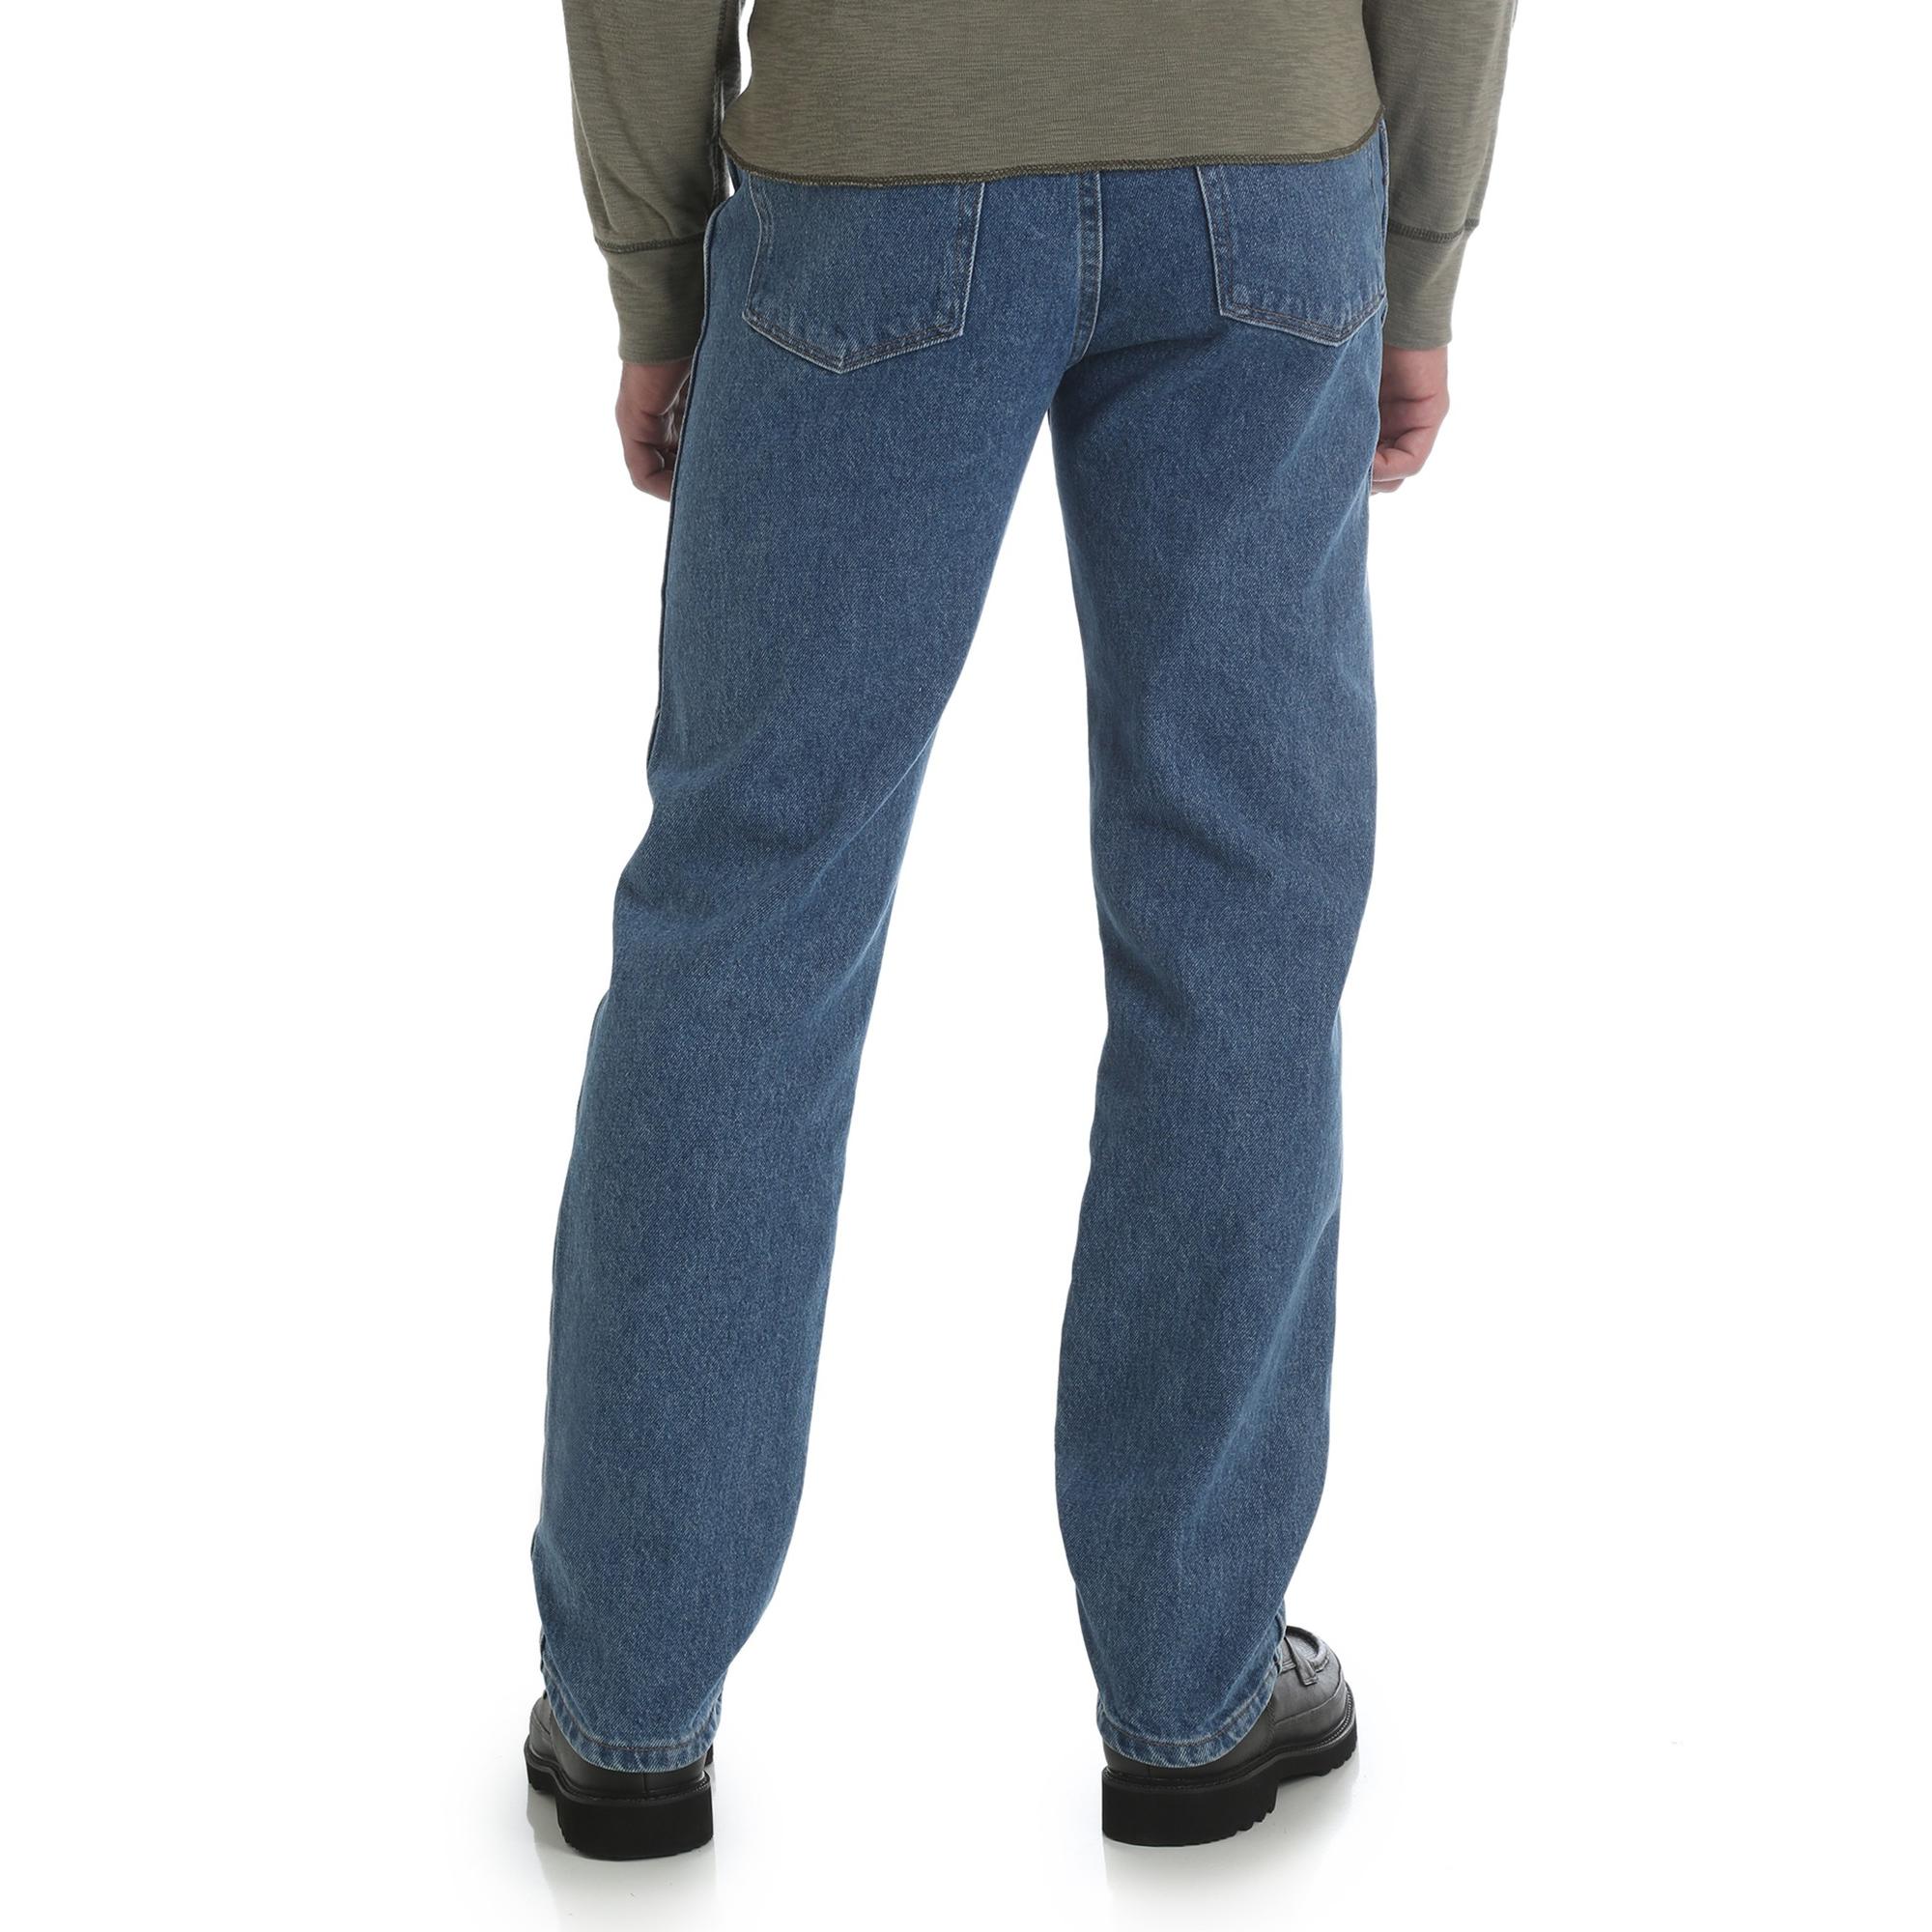 Wrangler Rustler Men's and Big Men's Regular Fit Jeans - image 4 of 4